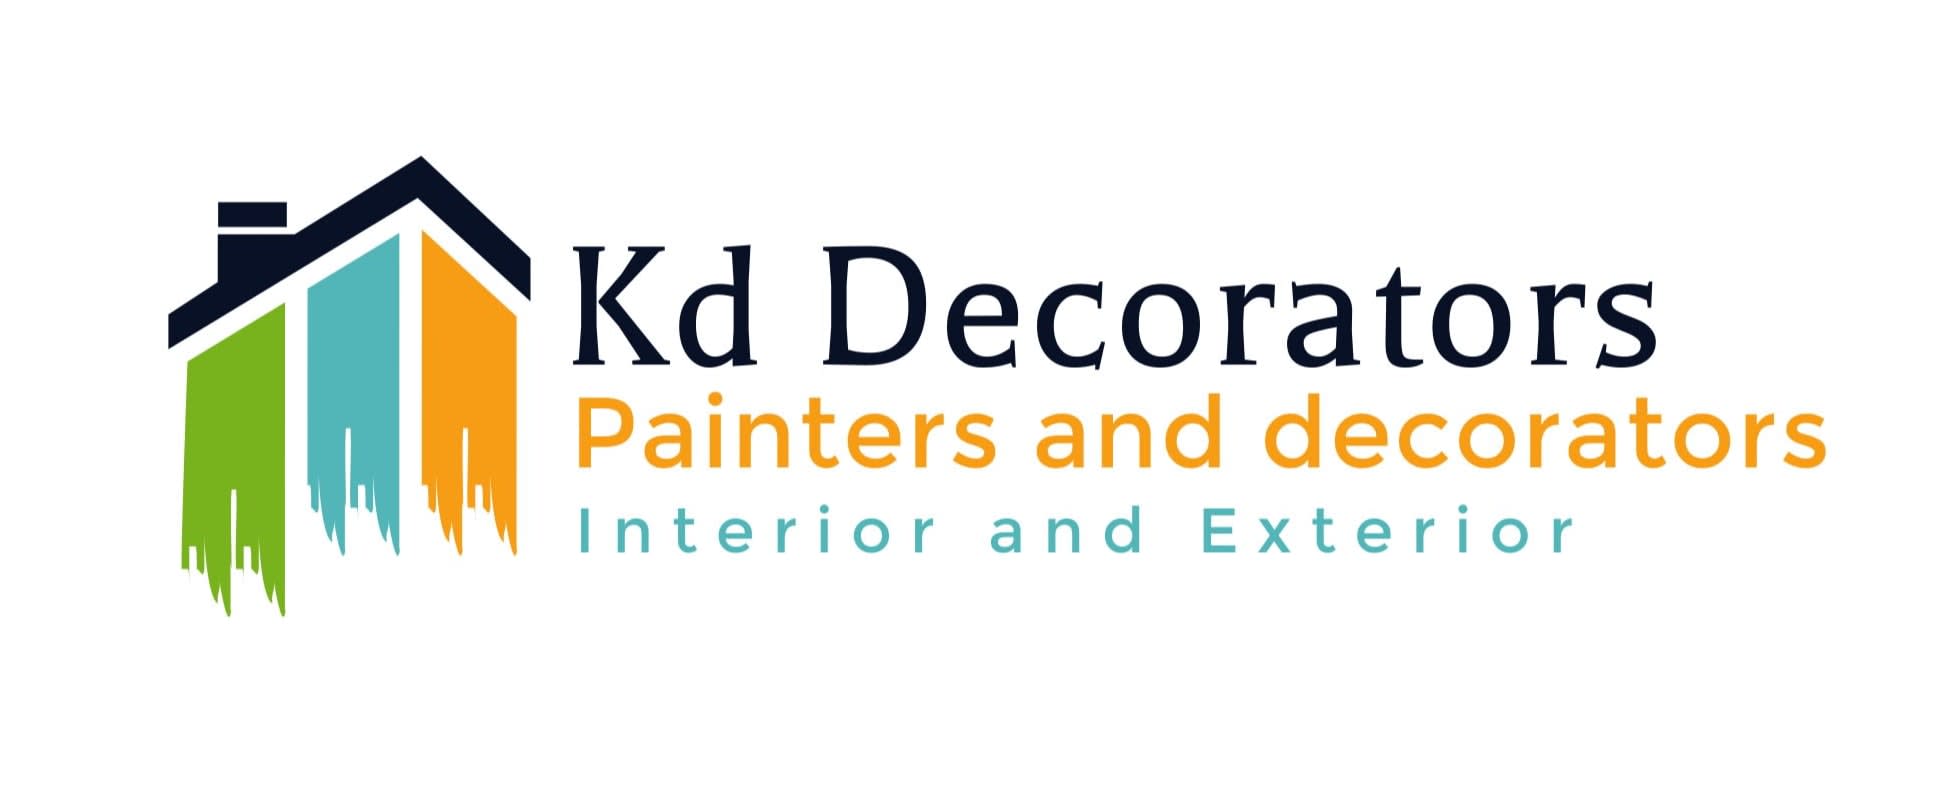 KD Decorators interior and exterior painters